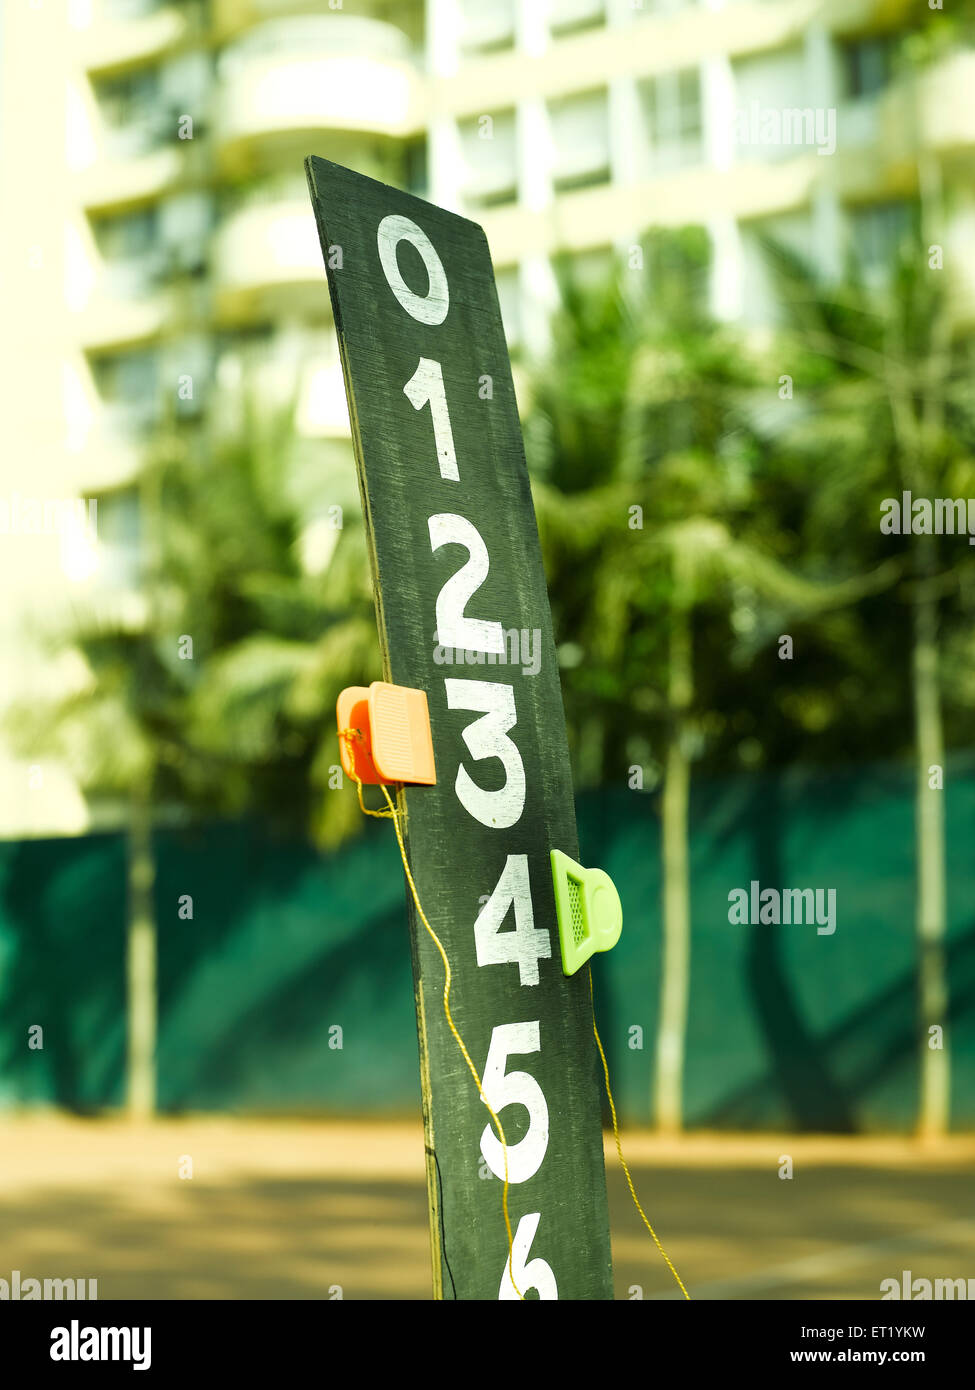 Tennis score Stock Photo